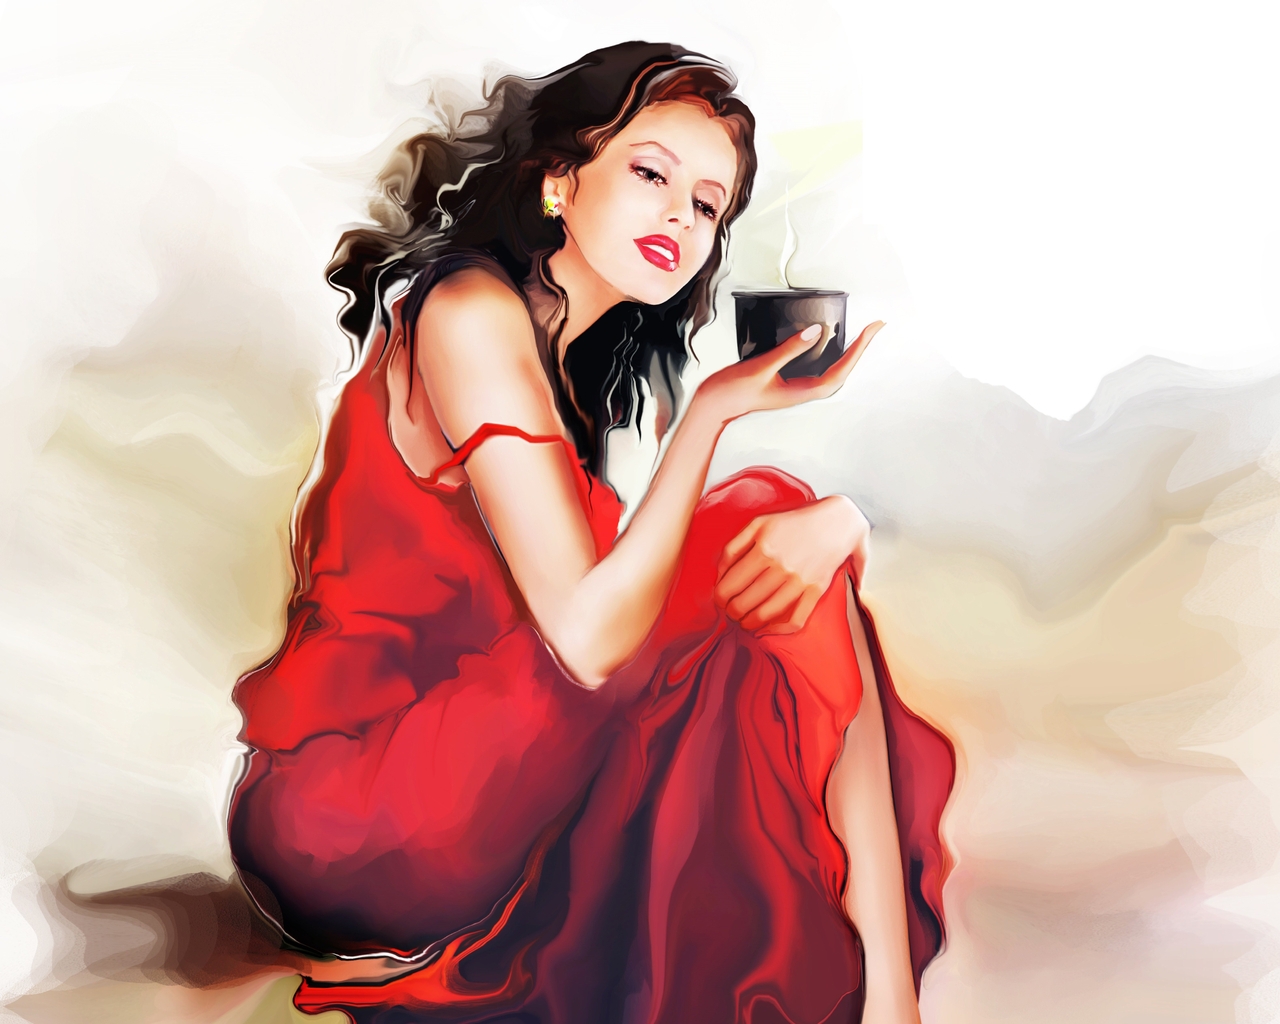 Image: Girl, sitting, art, drawing, dress, red, cup, holding, beverage, artist, Tatiana Nikitina, watercolor